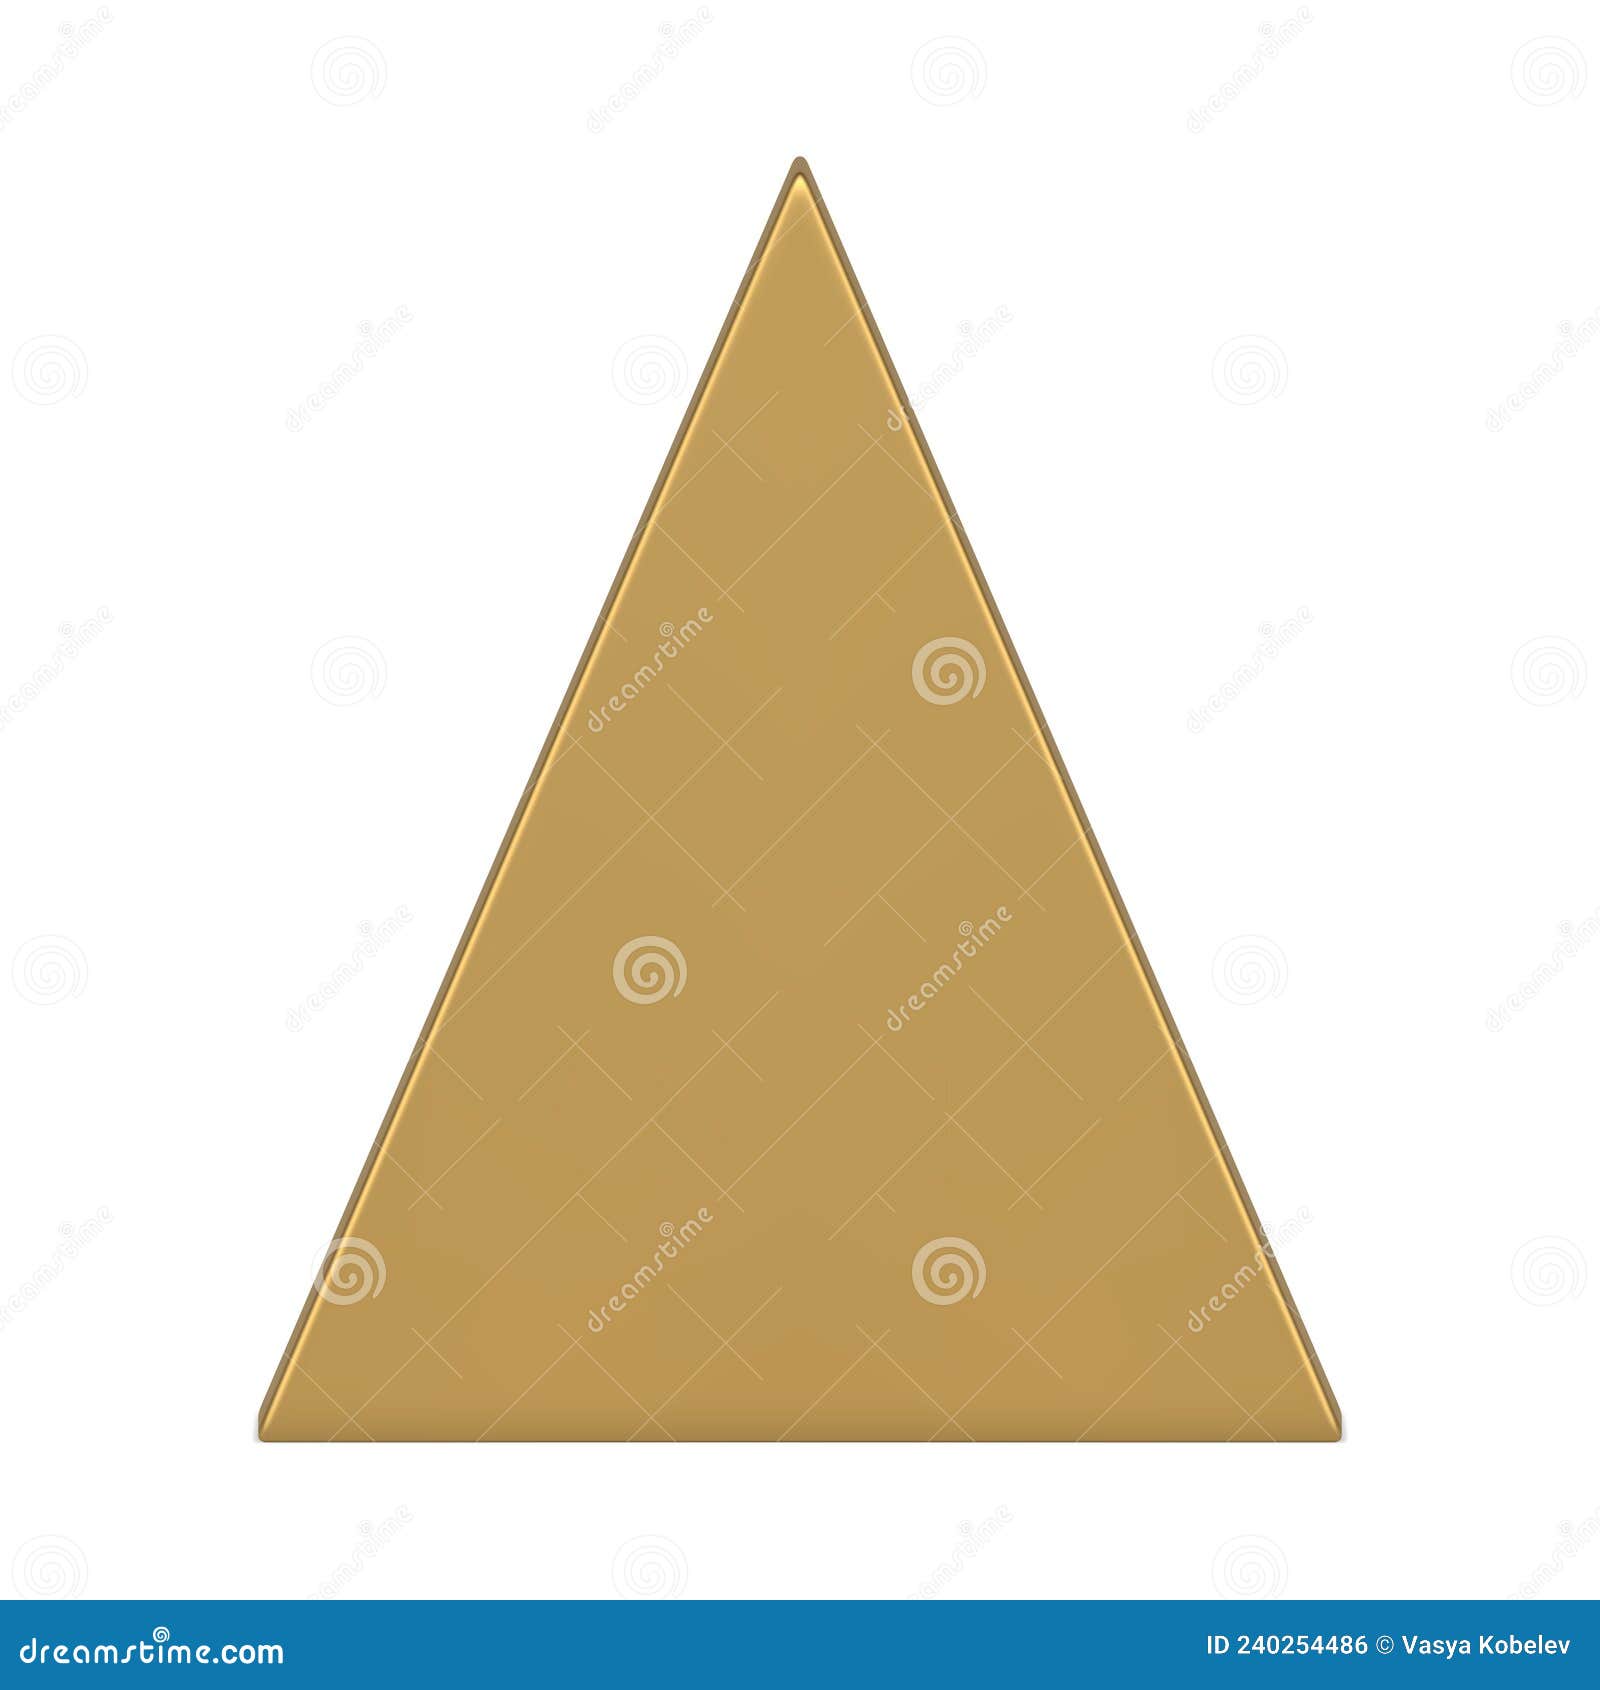 Luxury pyramid